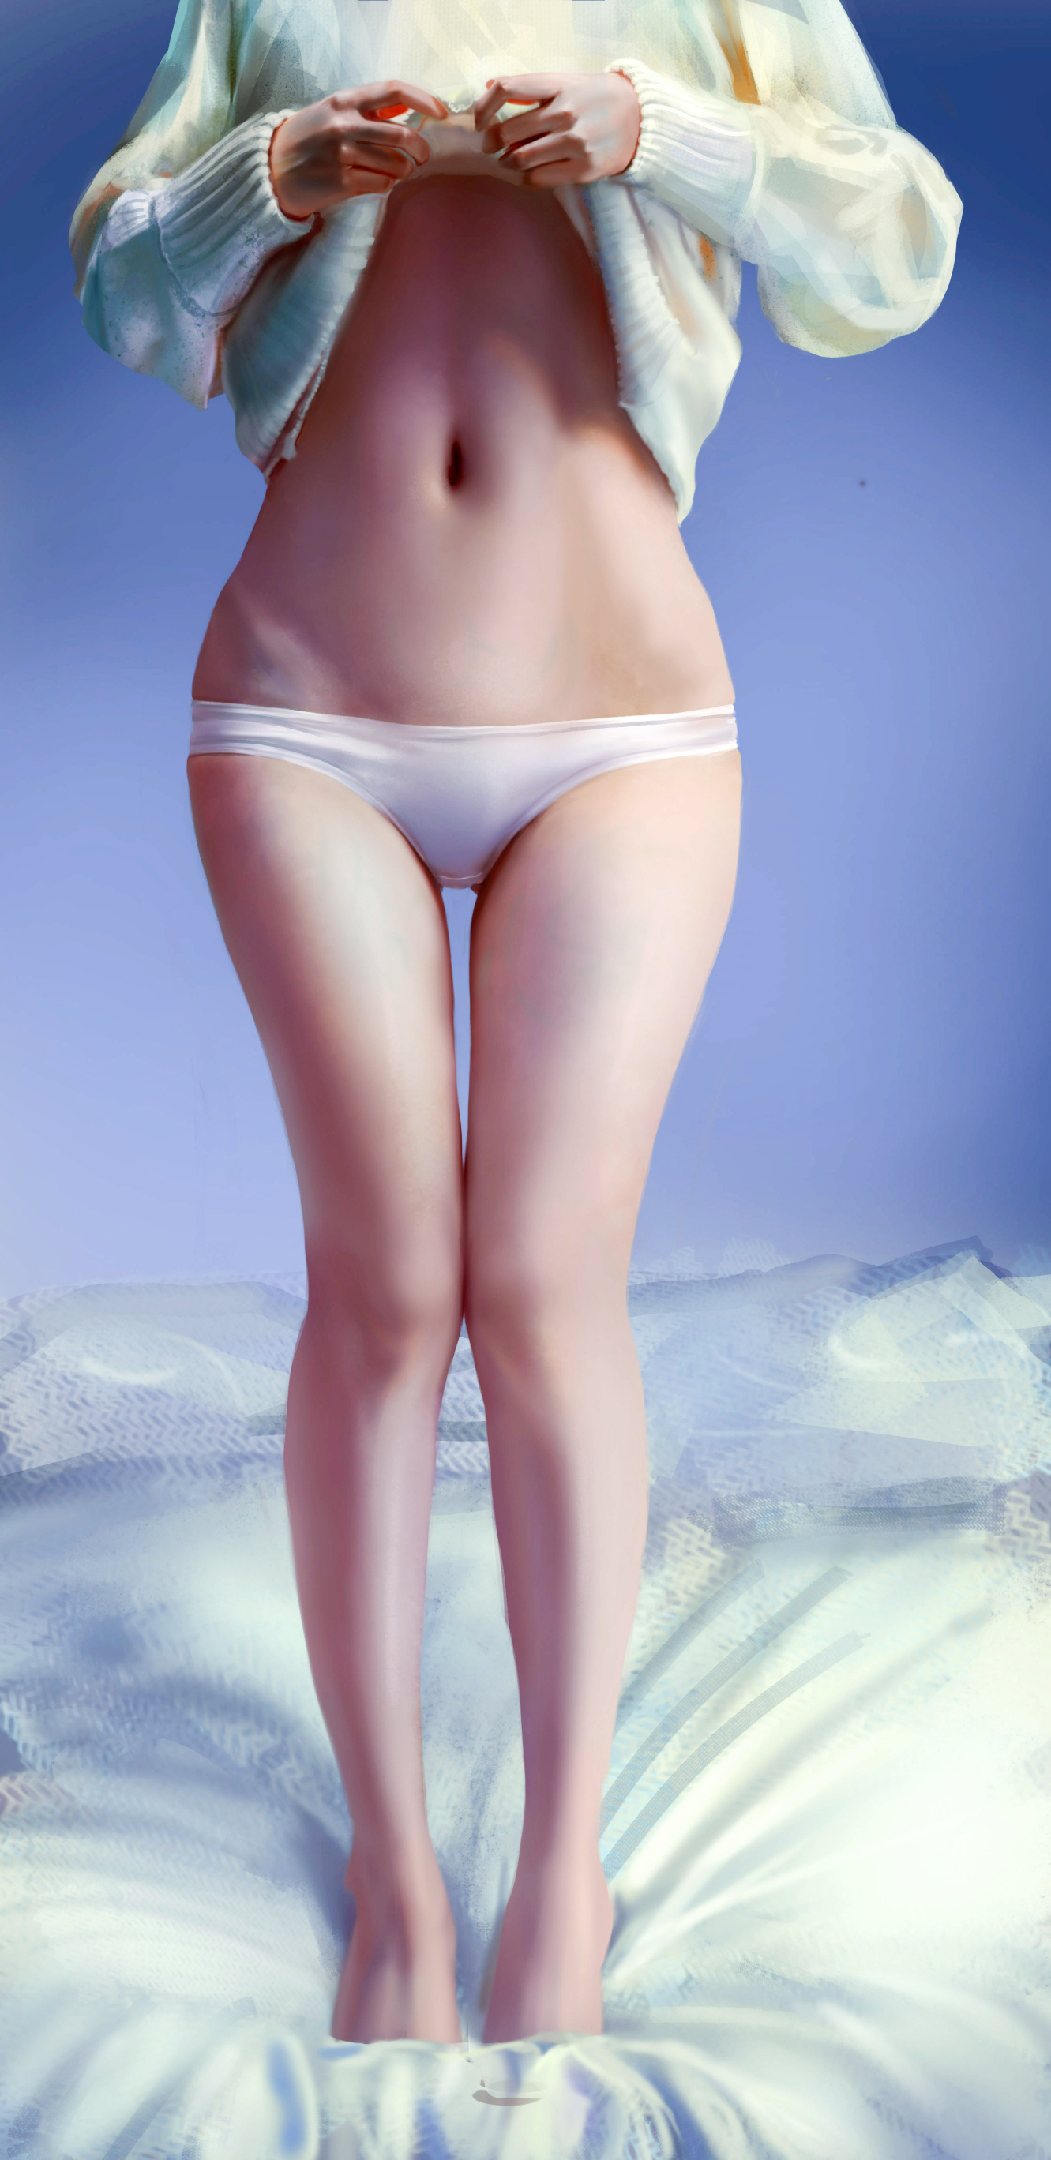 thigh-highs thigh_gap underwear white_panties white_sweater.